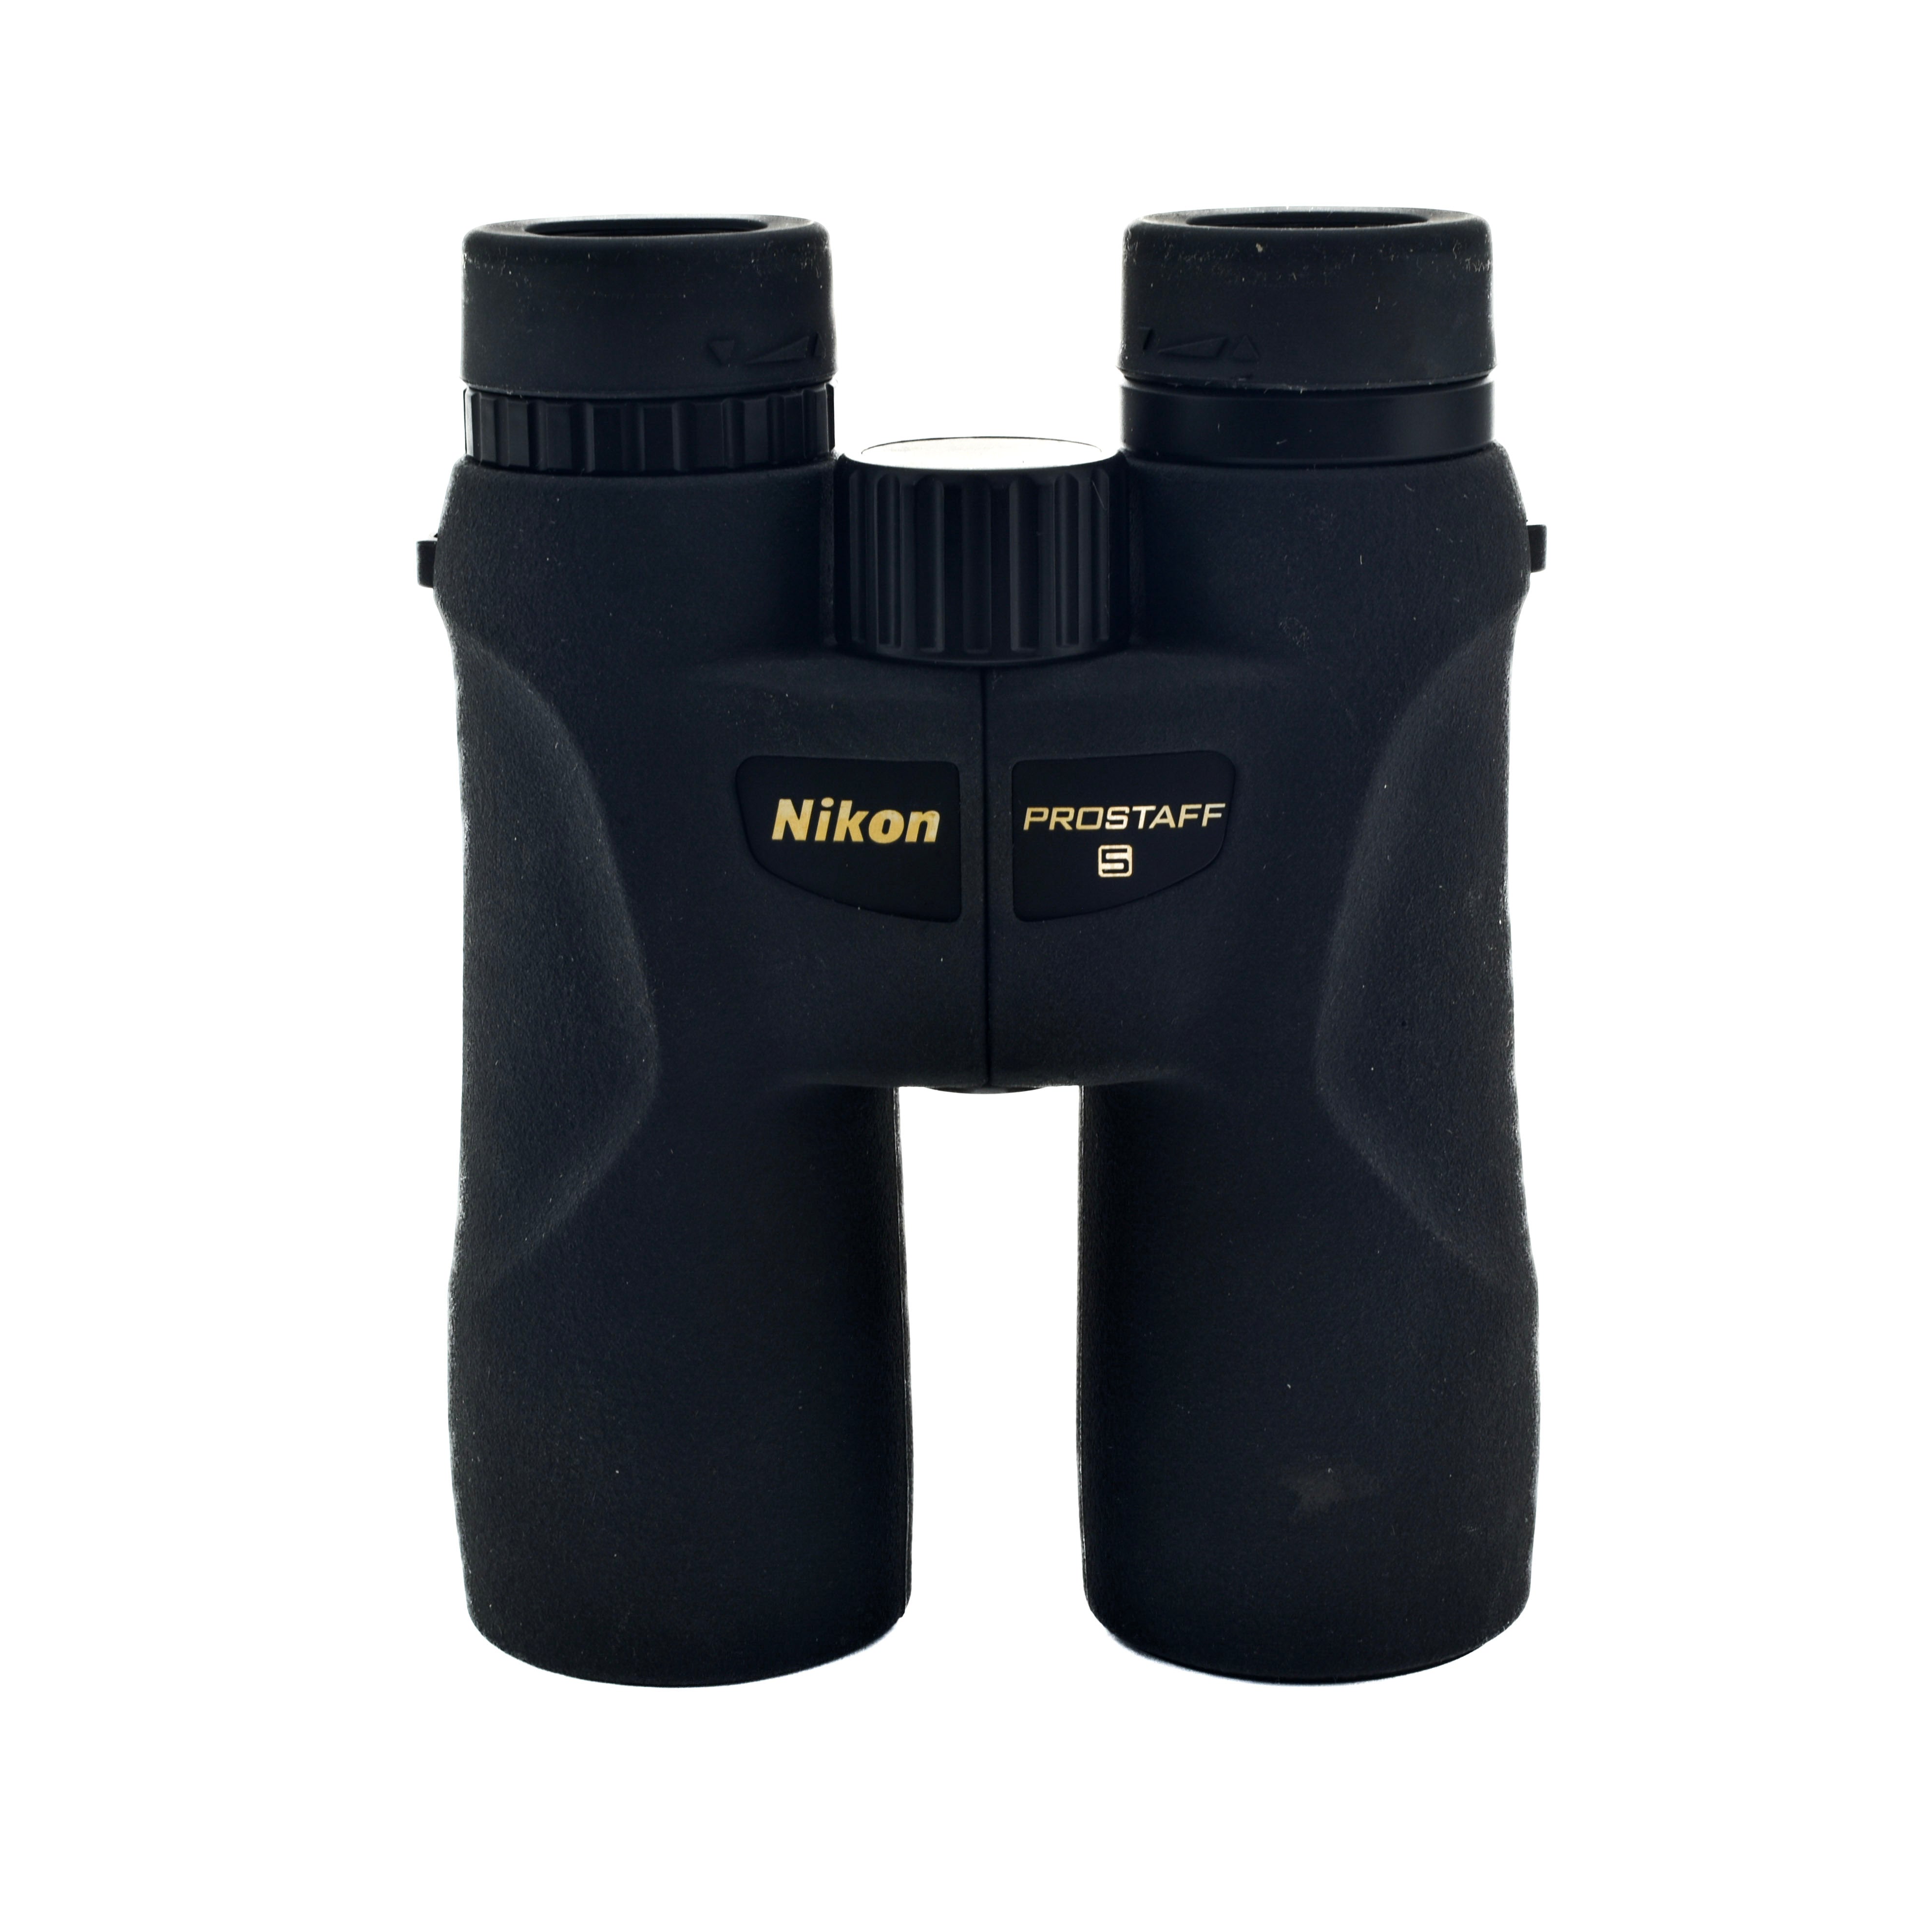 Nikon Prostaff 5 8x42 WP Binoculars (Black)